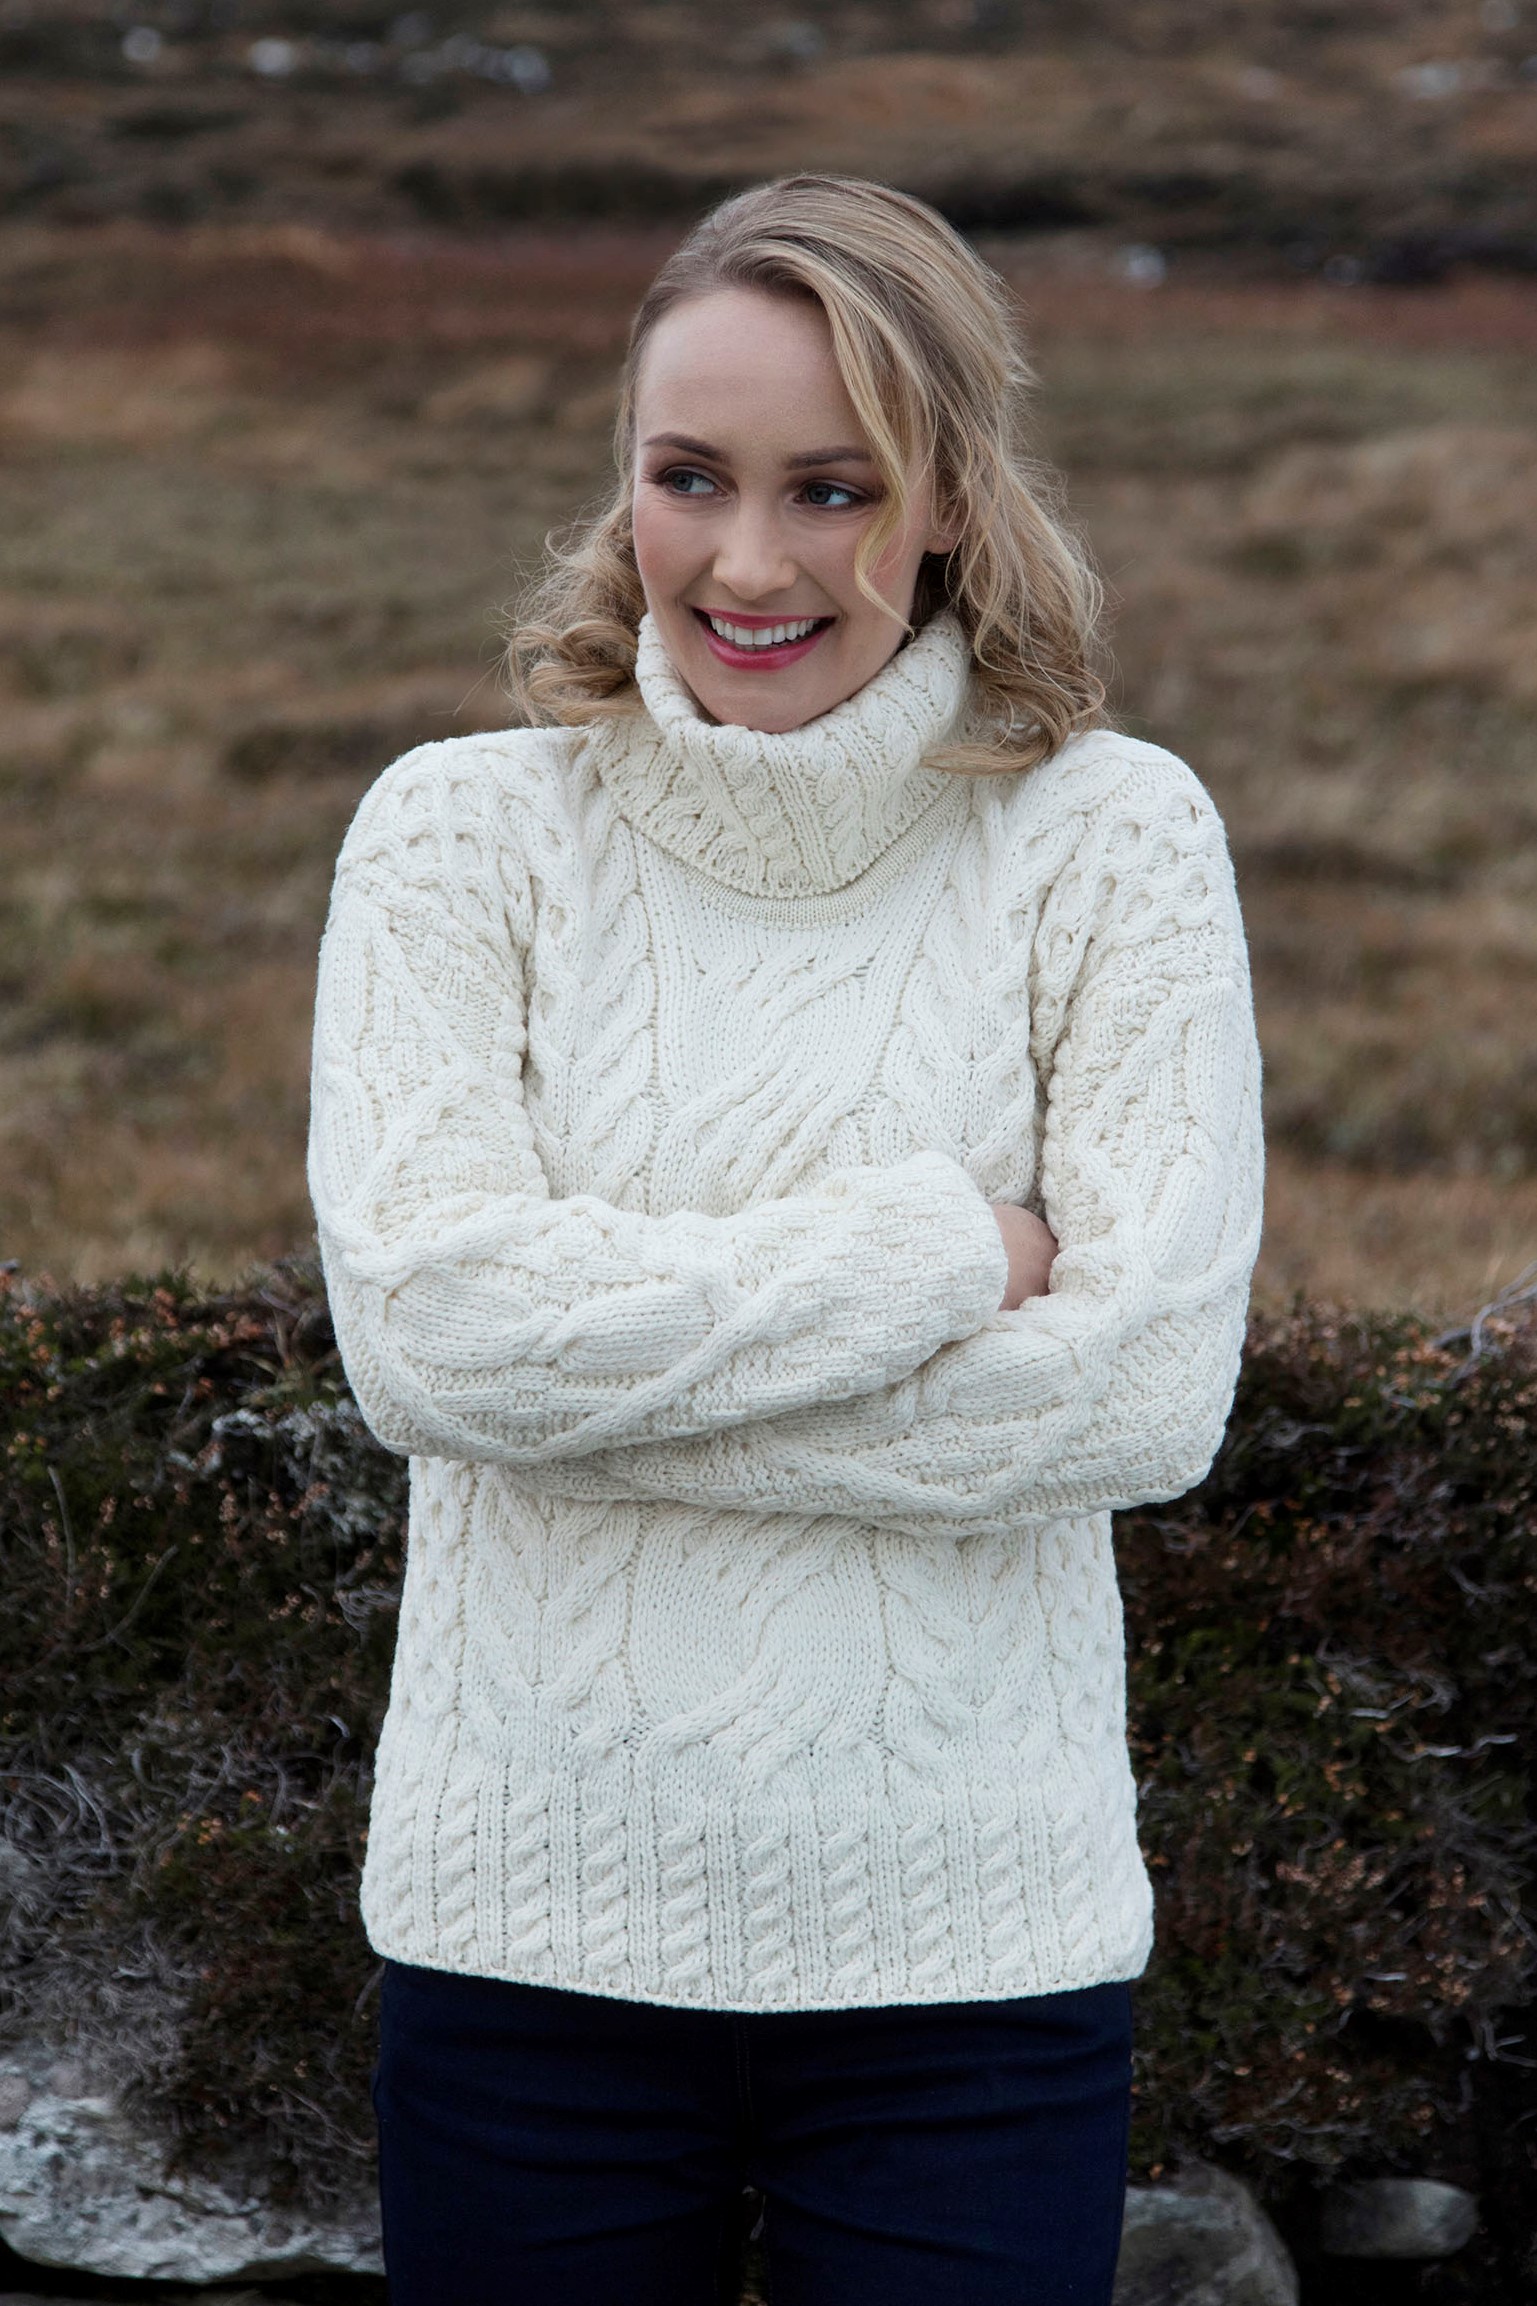 SAOL Irish Aran Sweater 100% Super Soft Premium Merino Wool Cable Knit White Turtleneck Pullover for Women Made in Ireland - image 2 of 5